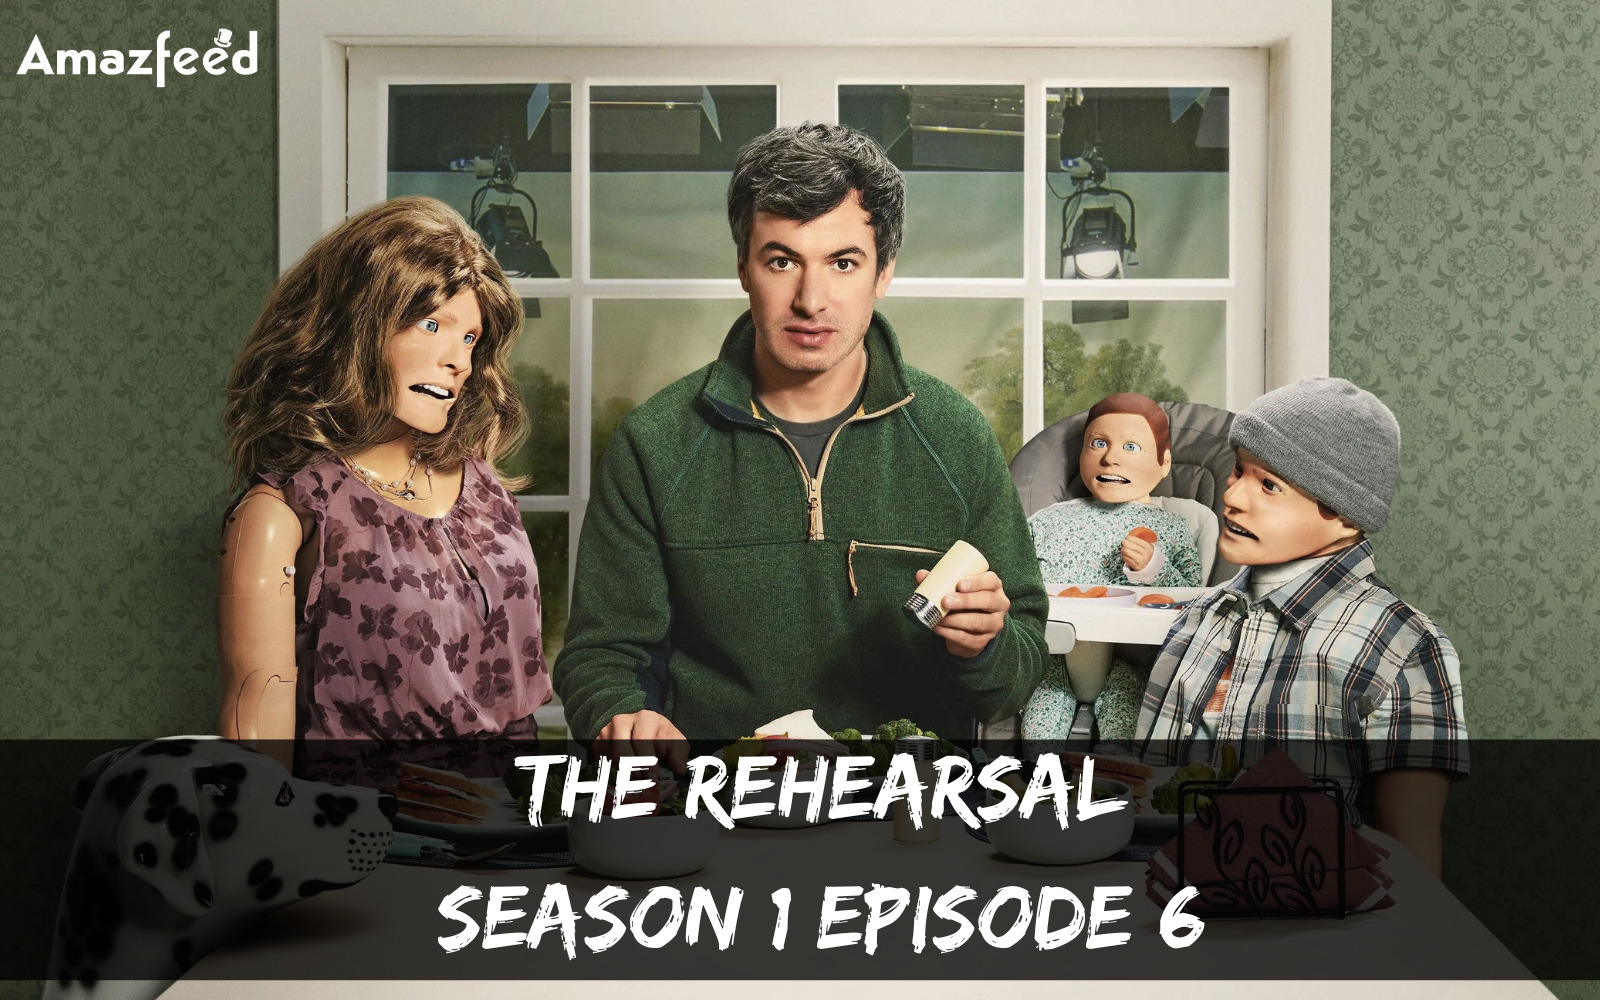 The Rehearsal Season 1 Episode 6 spoiler